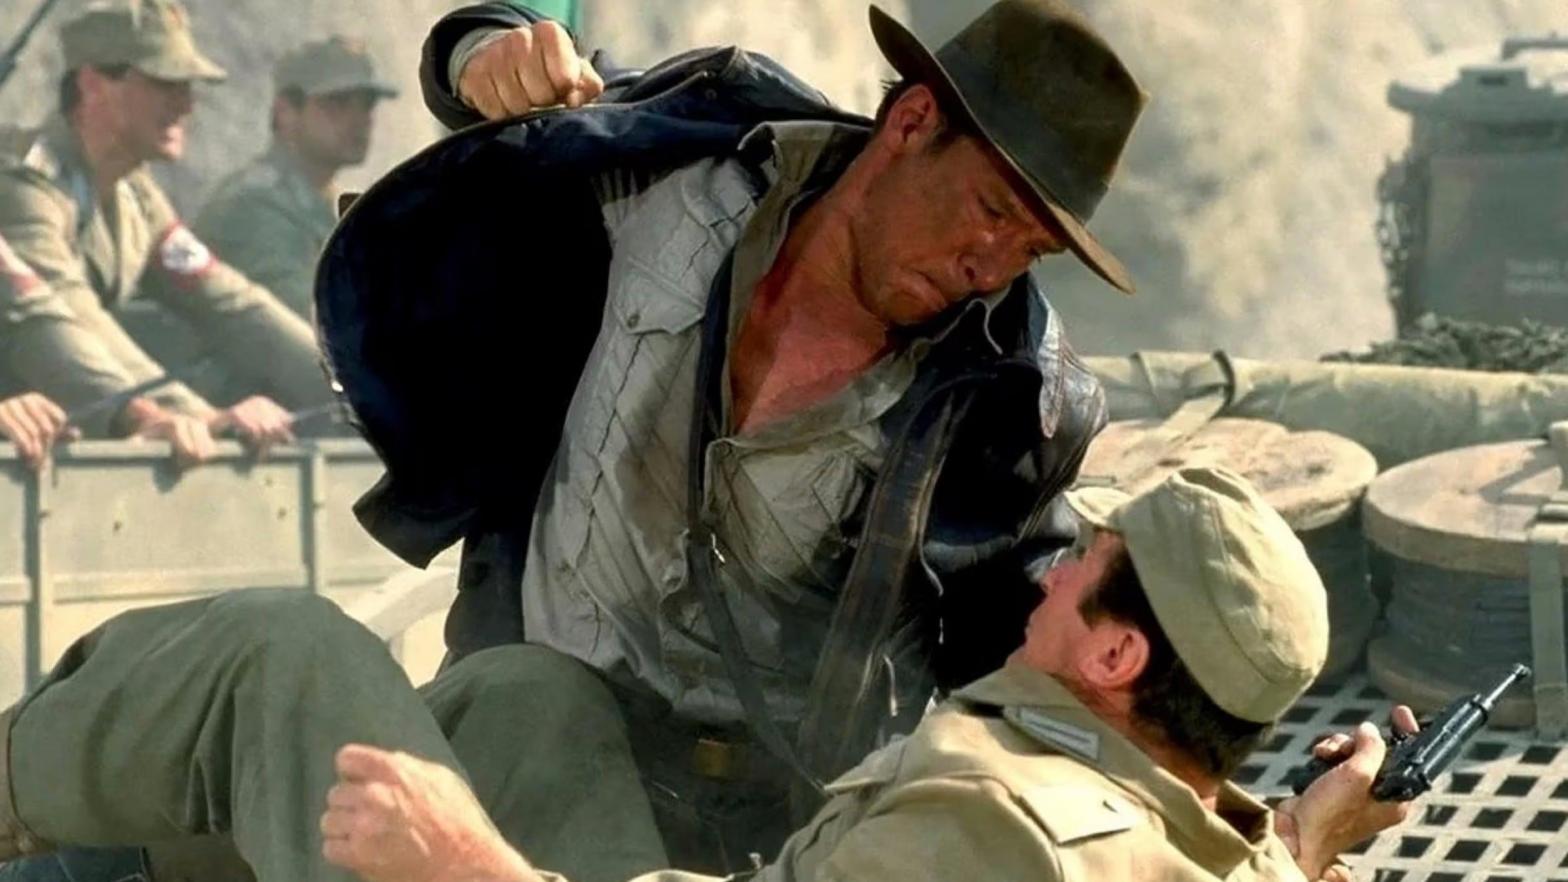 Indiana Jones punching a Nazi. (Image: Lucasfilm)